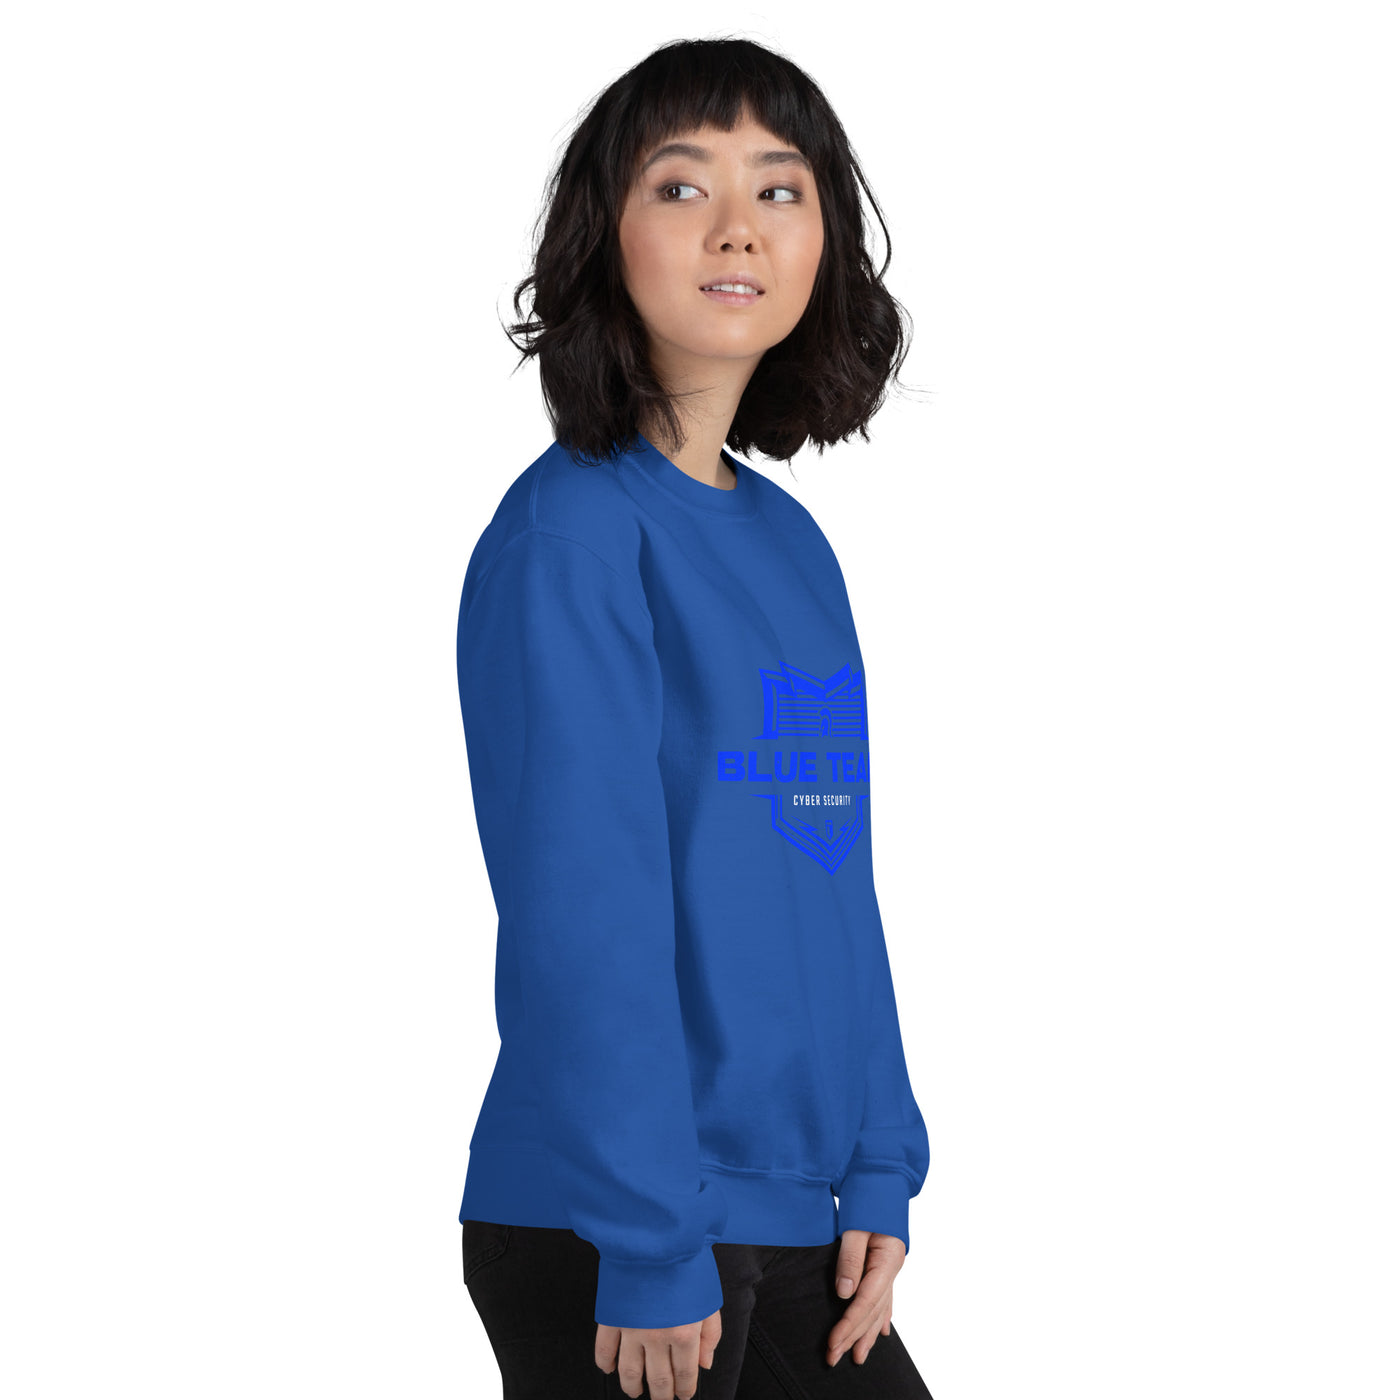 Cyber Security Blue Team V14 - Unisex Sweatshirt